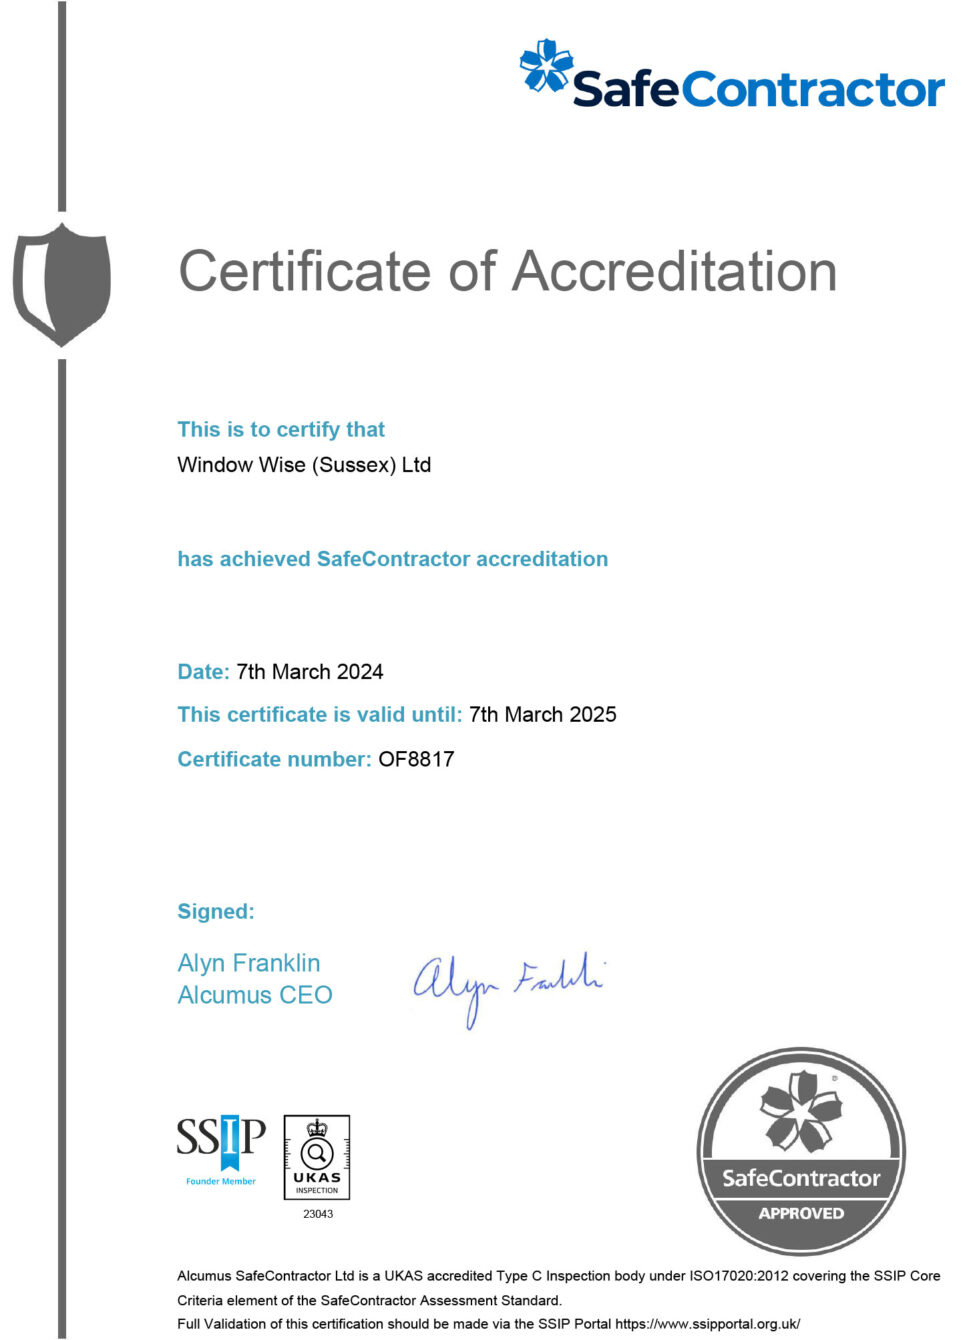 Safe Contractor Certificate